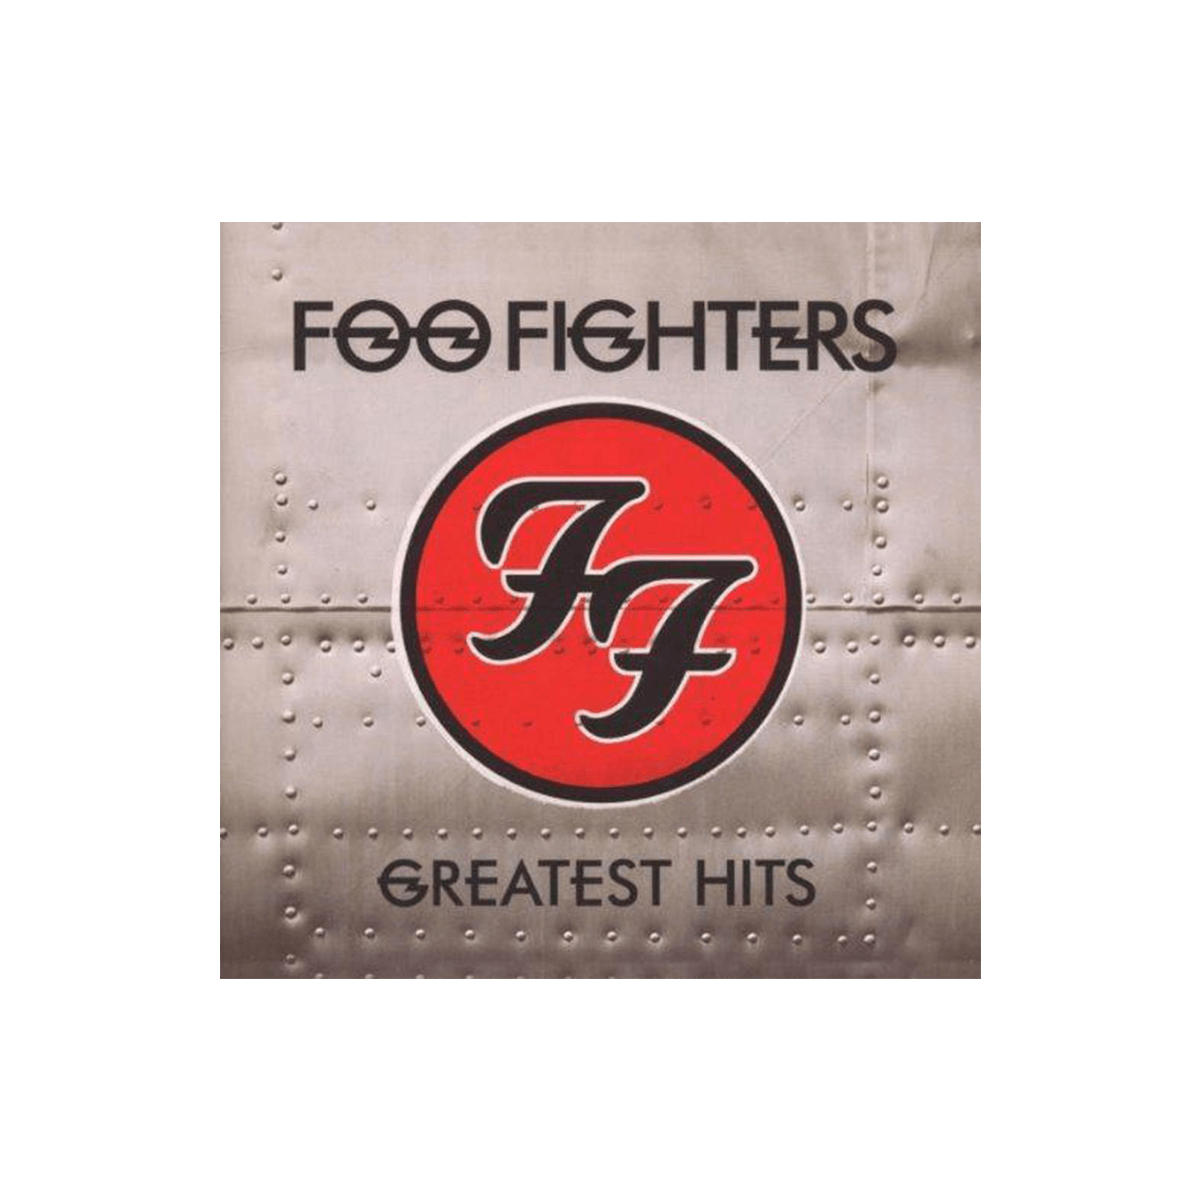 Foo Fighters Walk Vinyl Record Song Lyric Music Print - Red Heart